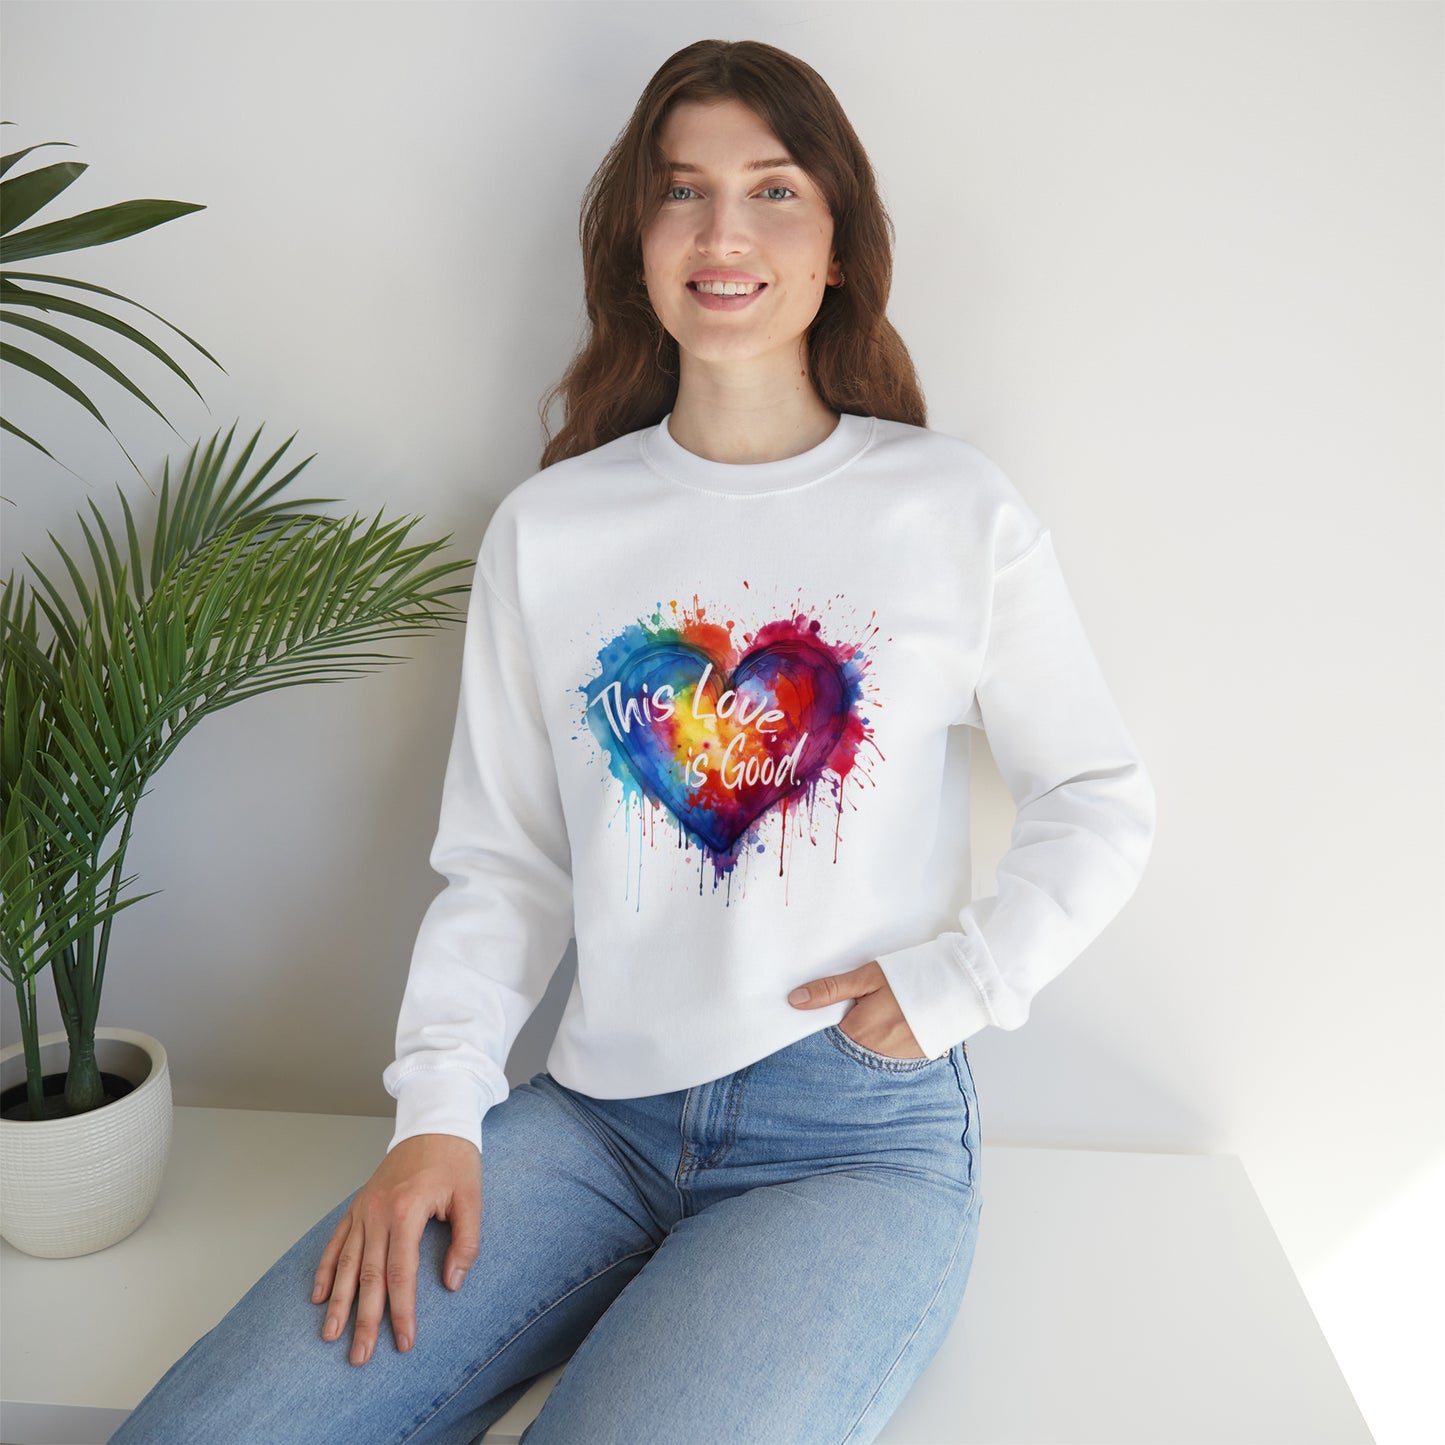 Rainbow Heart Sweatshirt: 'This Love, is Good', Wearable Watercolor Art